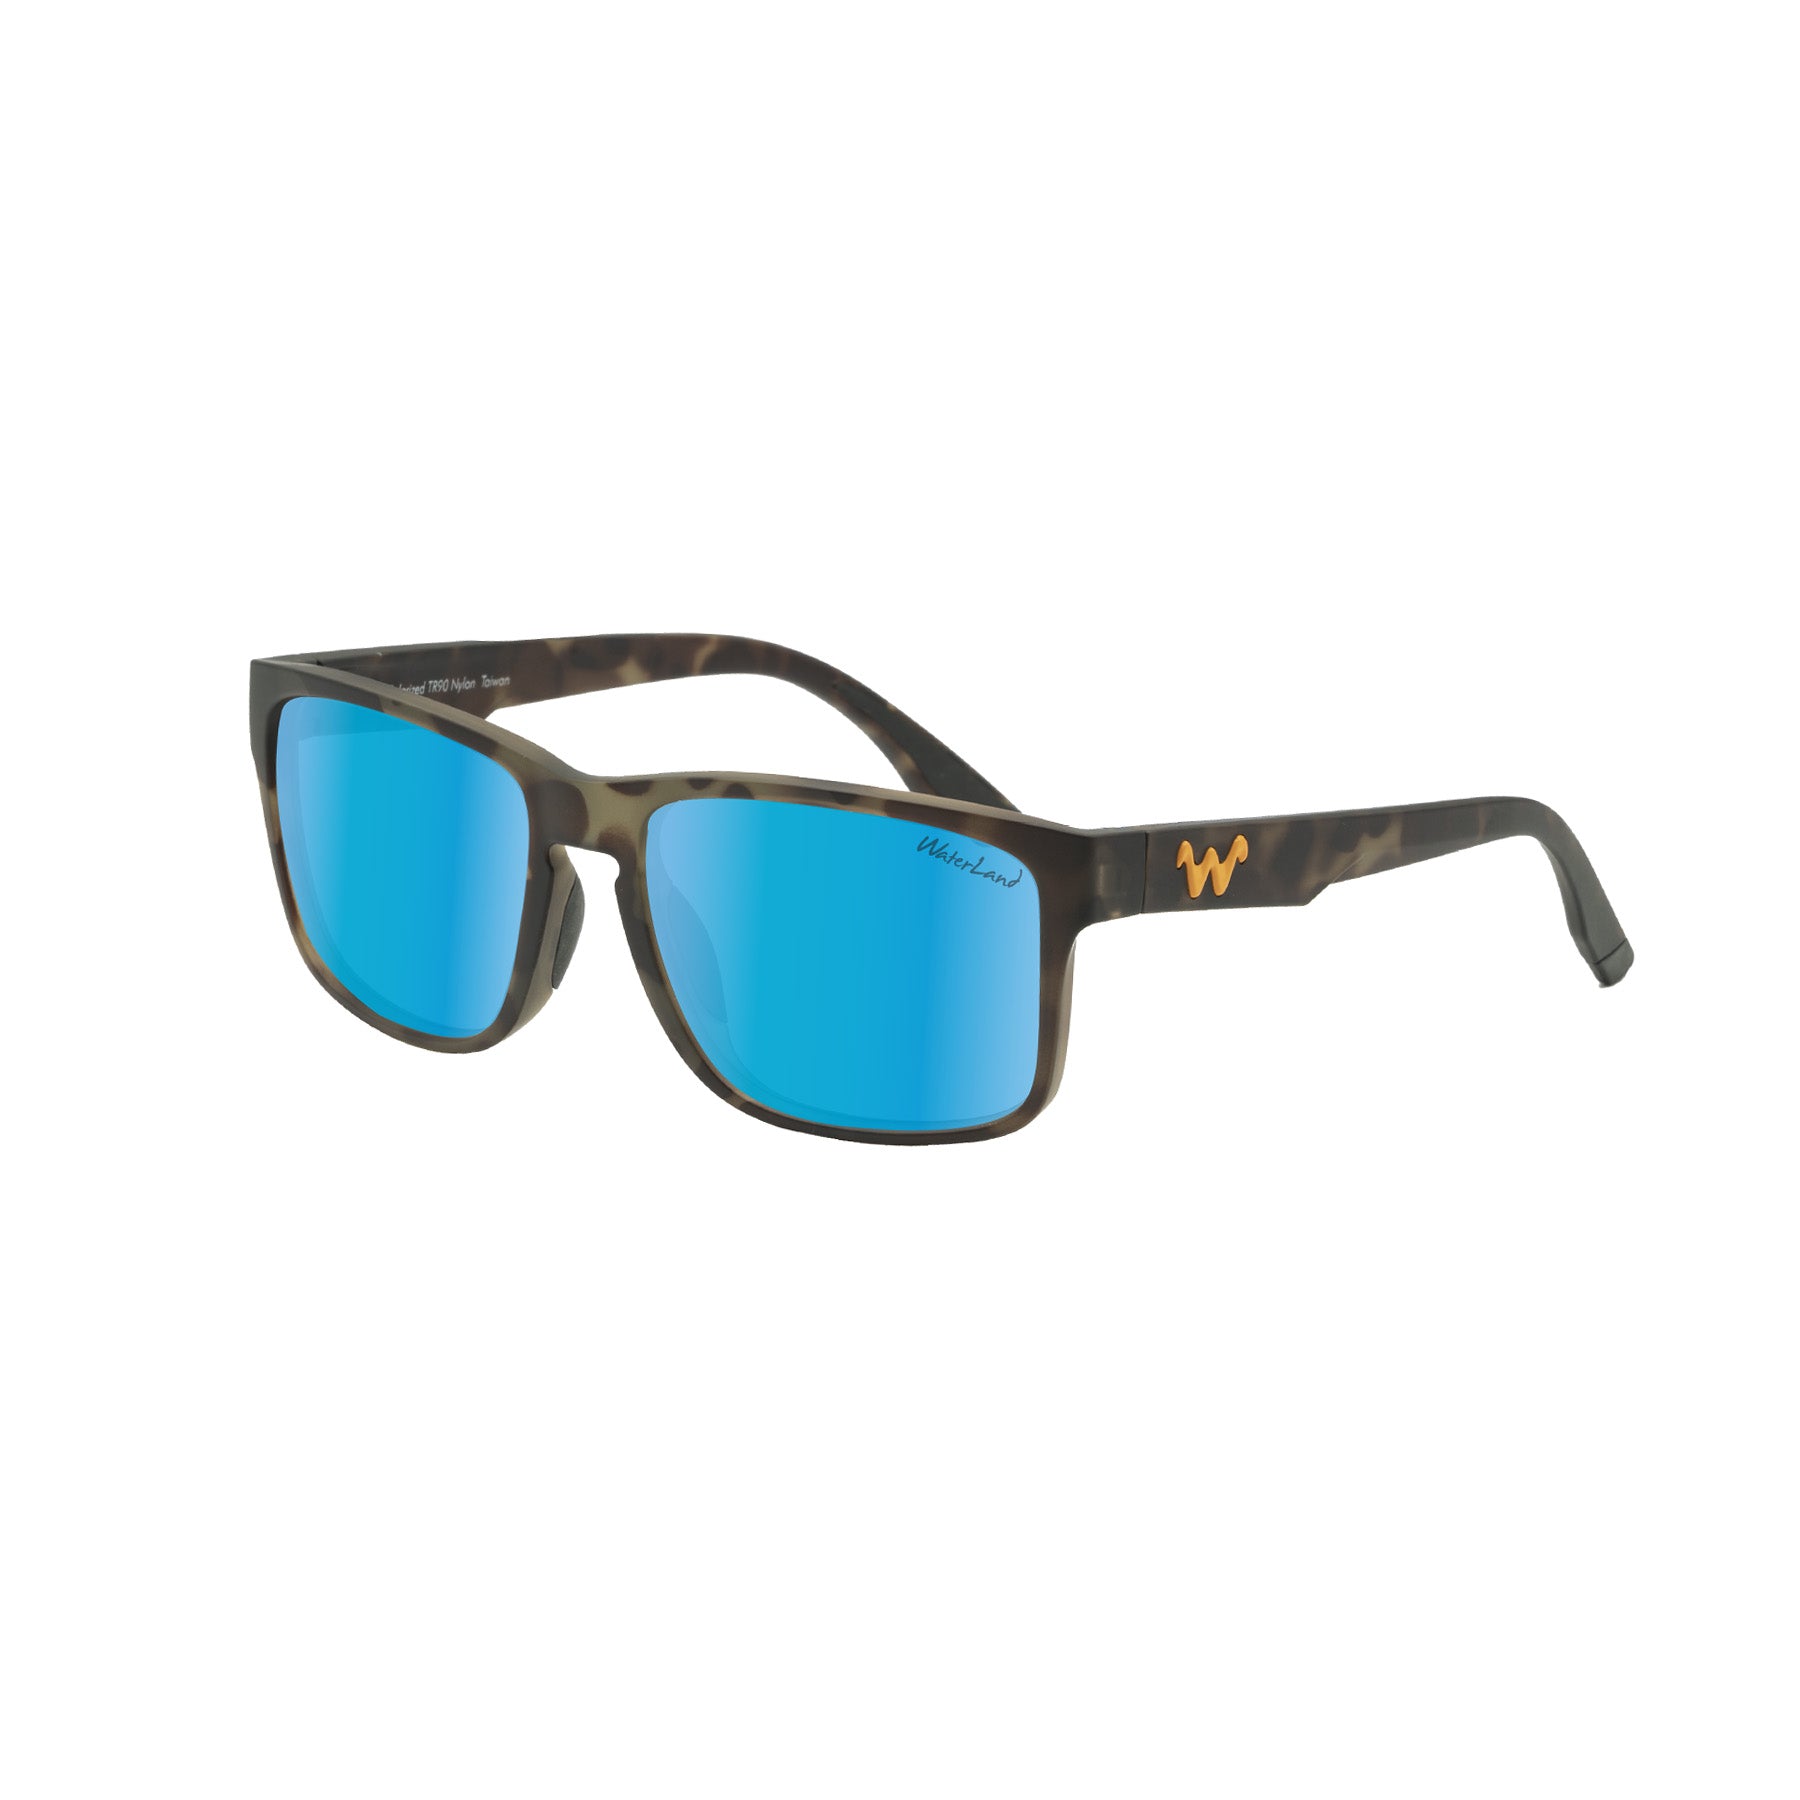 WaterLand Polarized Sunglasses - Sobro - Tortoise